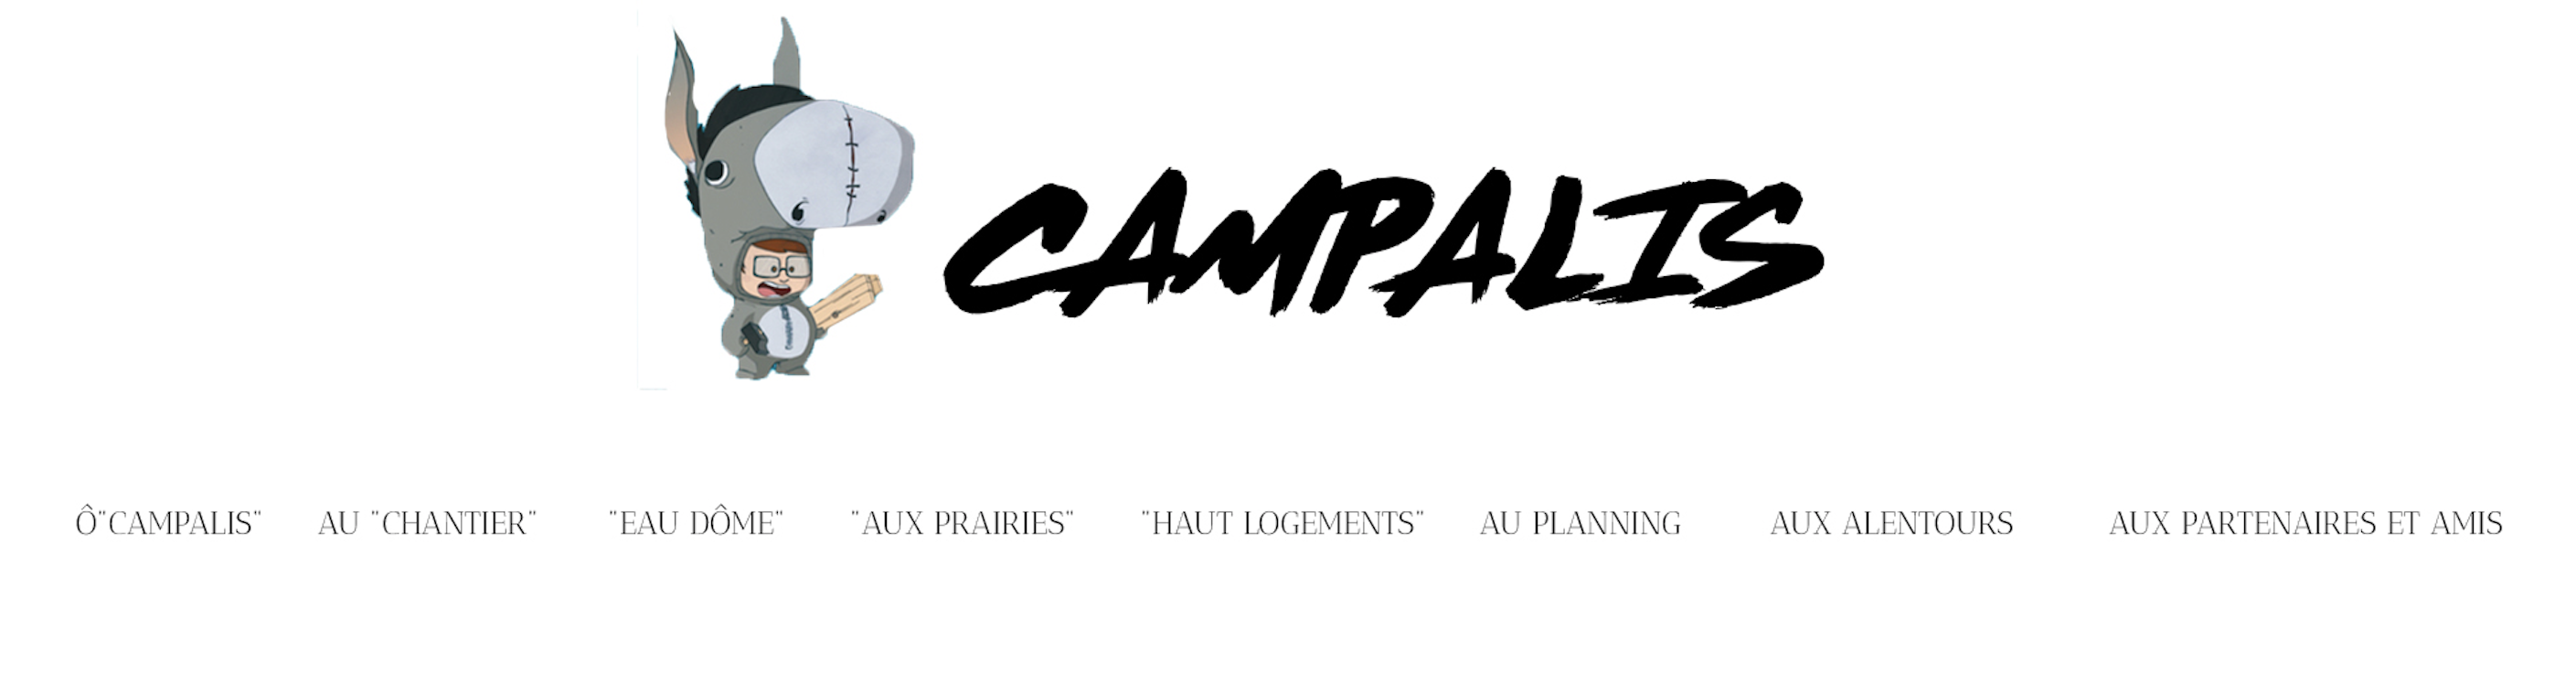 Campalis